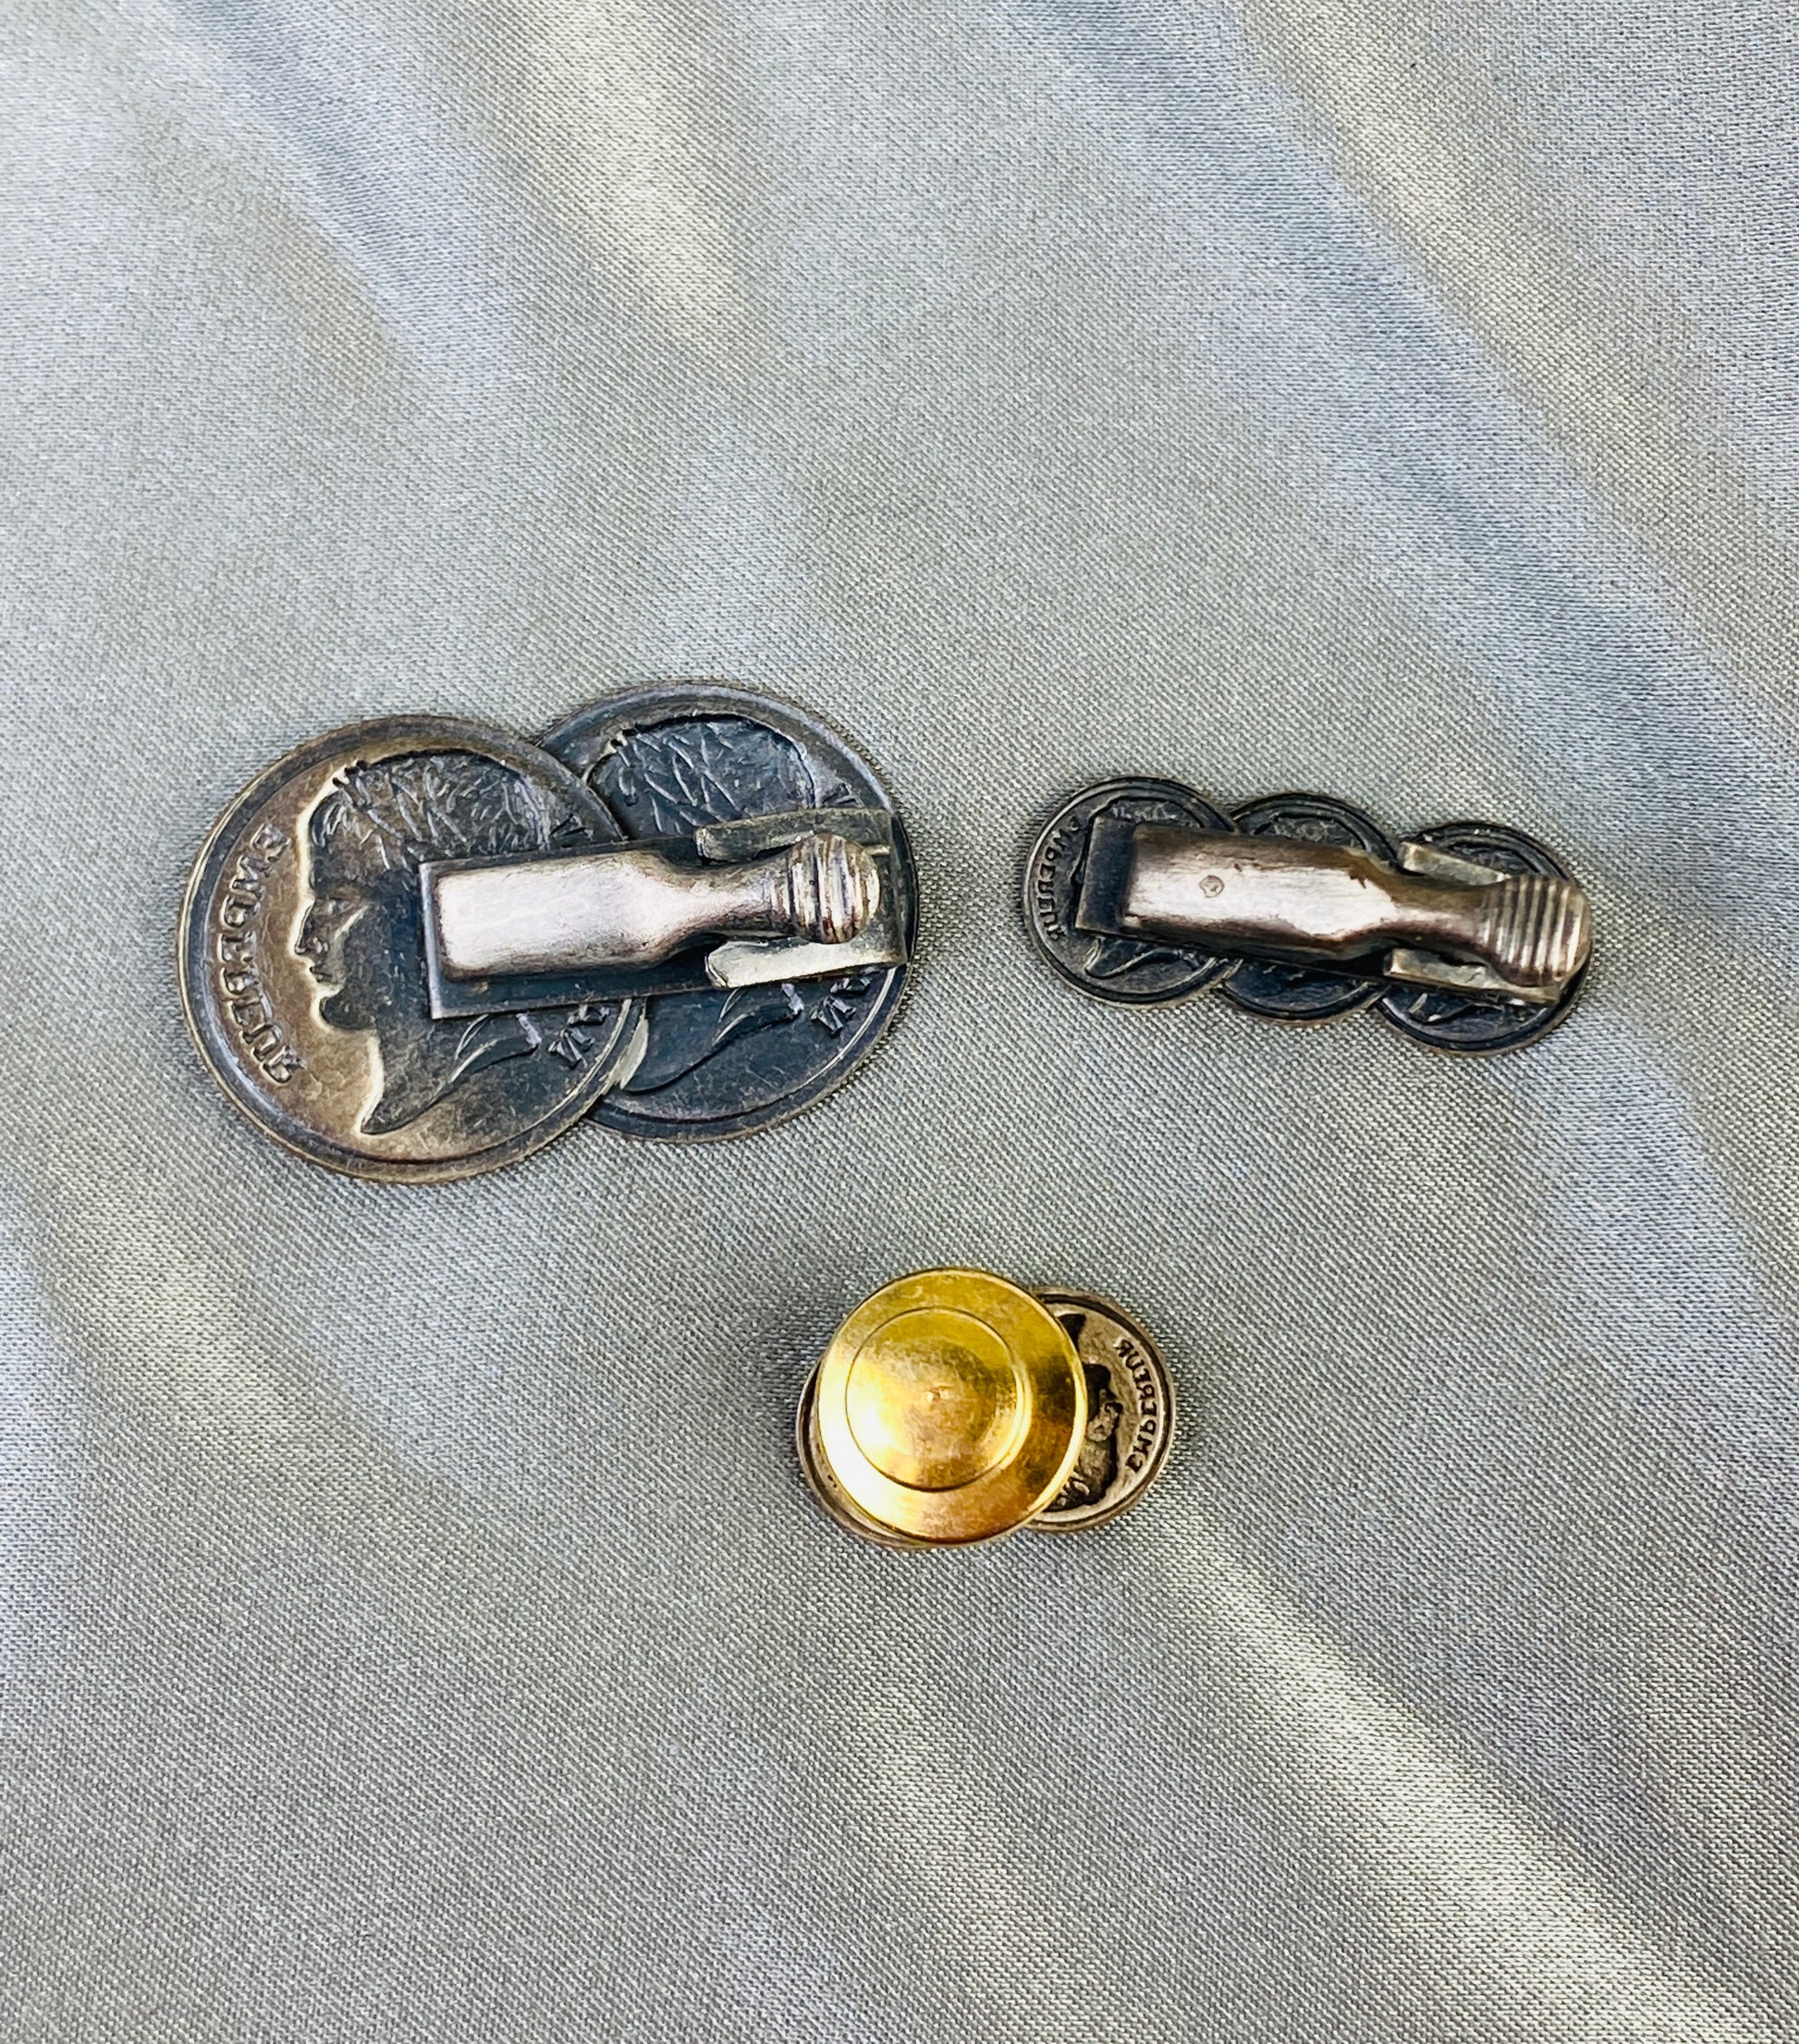 Vintage 1970s 'Napoleon Empereur' Silver Coin Lapel Pin and Tie Bar Clips, 3 Piece